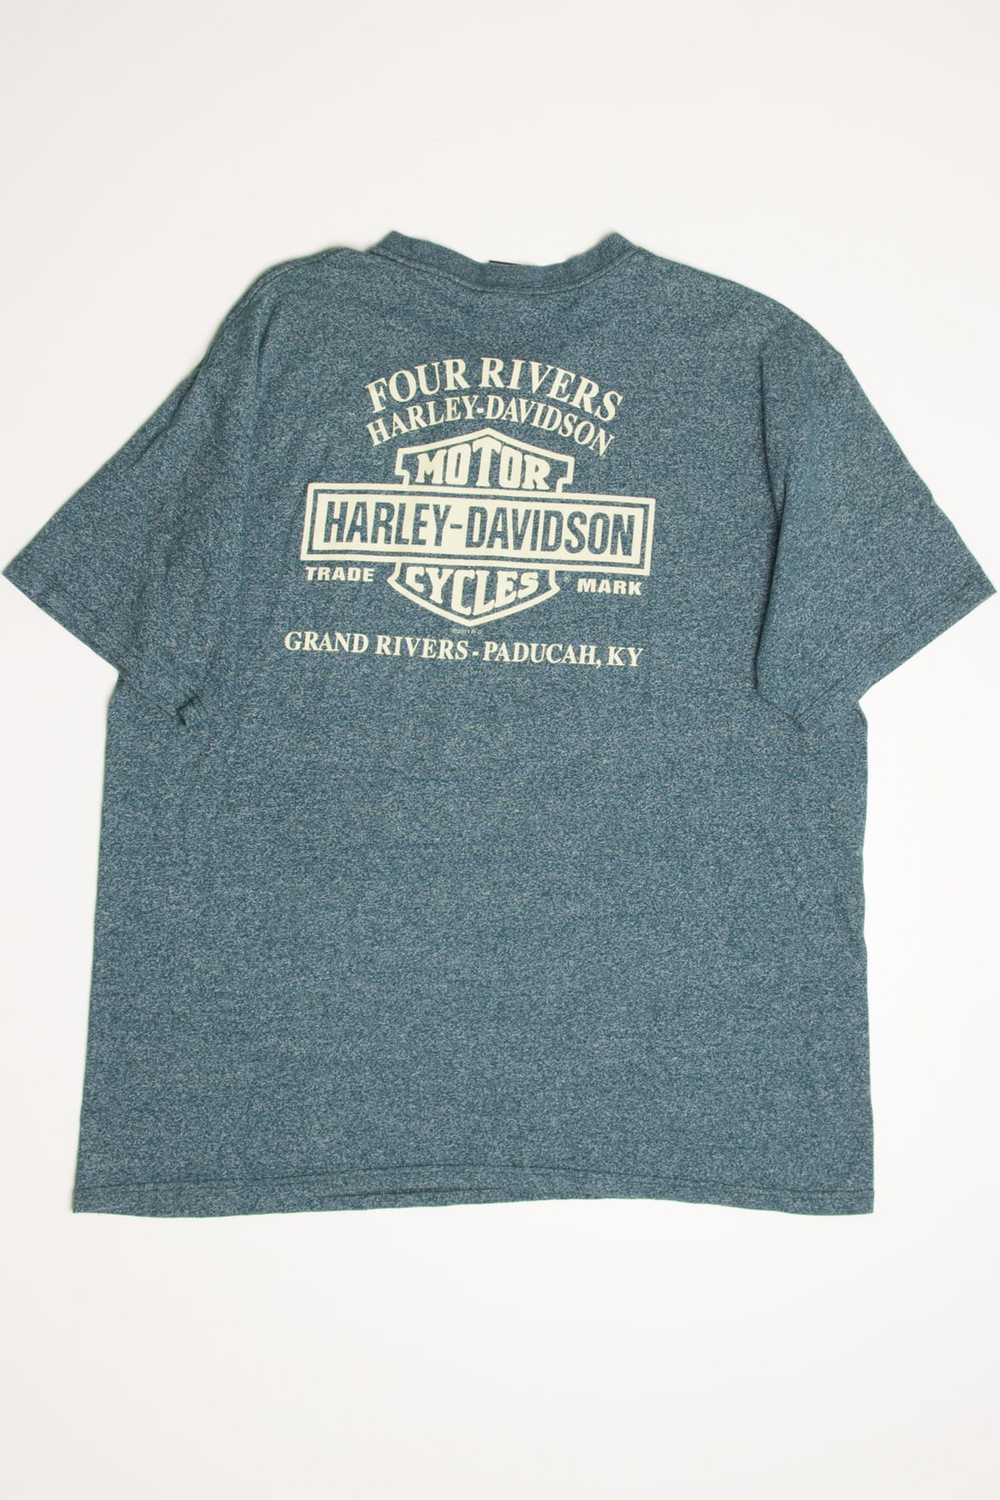 Four Rivers Kentucky Harley-Davidson T-Shirt 1 - image 1